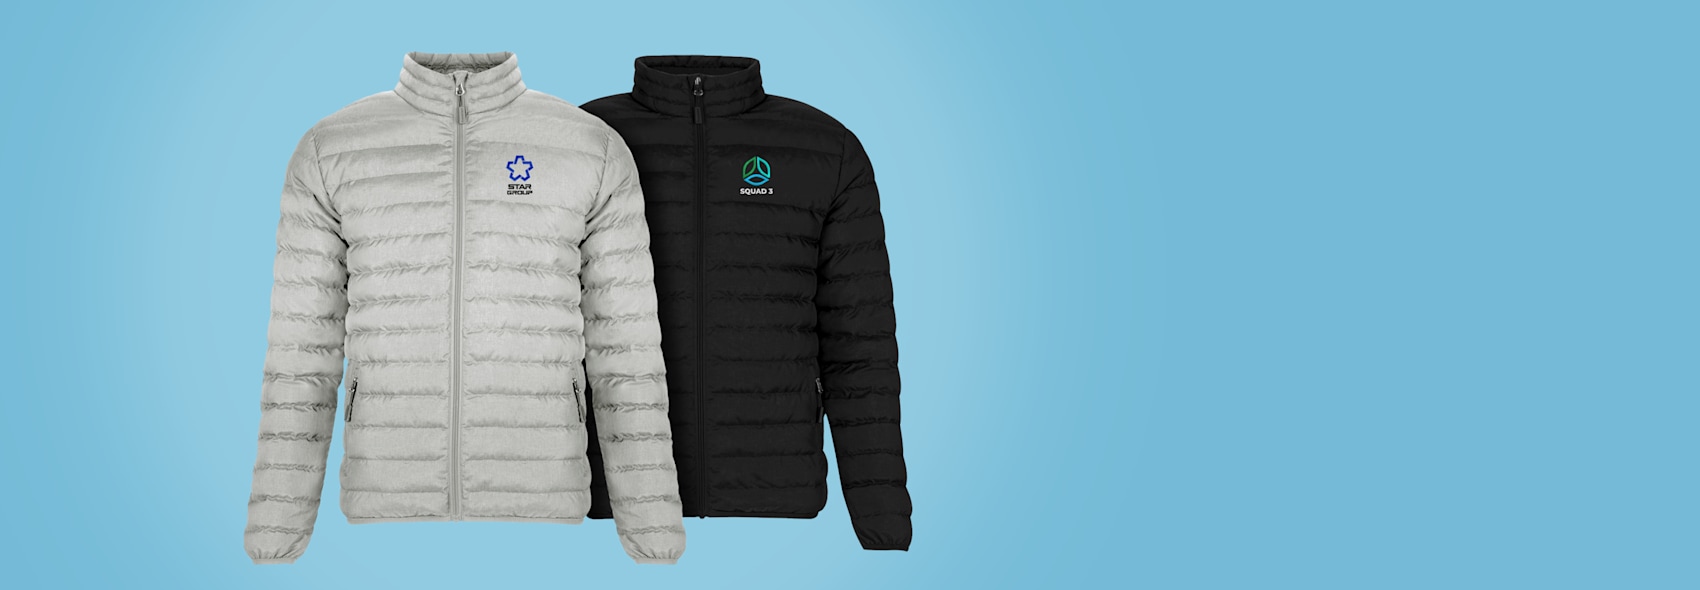 Larger version: Fleece 1/4-zip pullover jackets